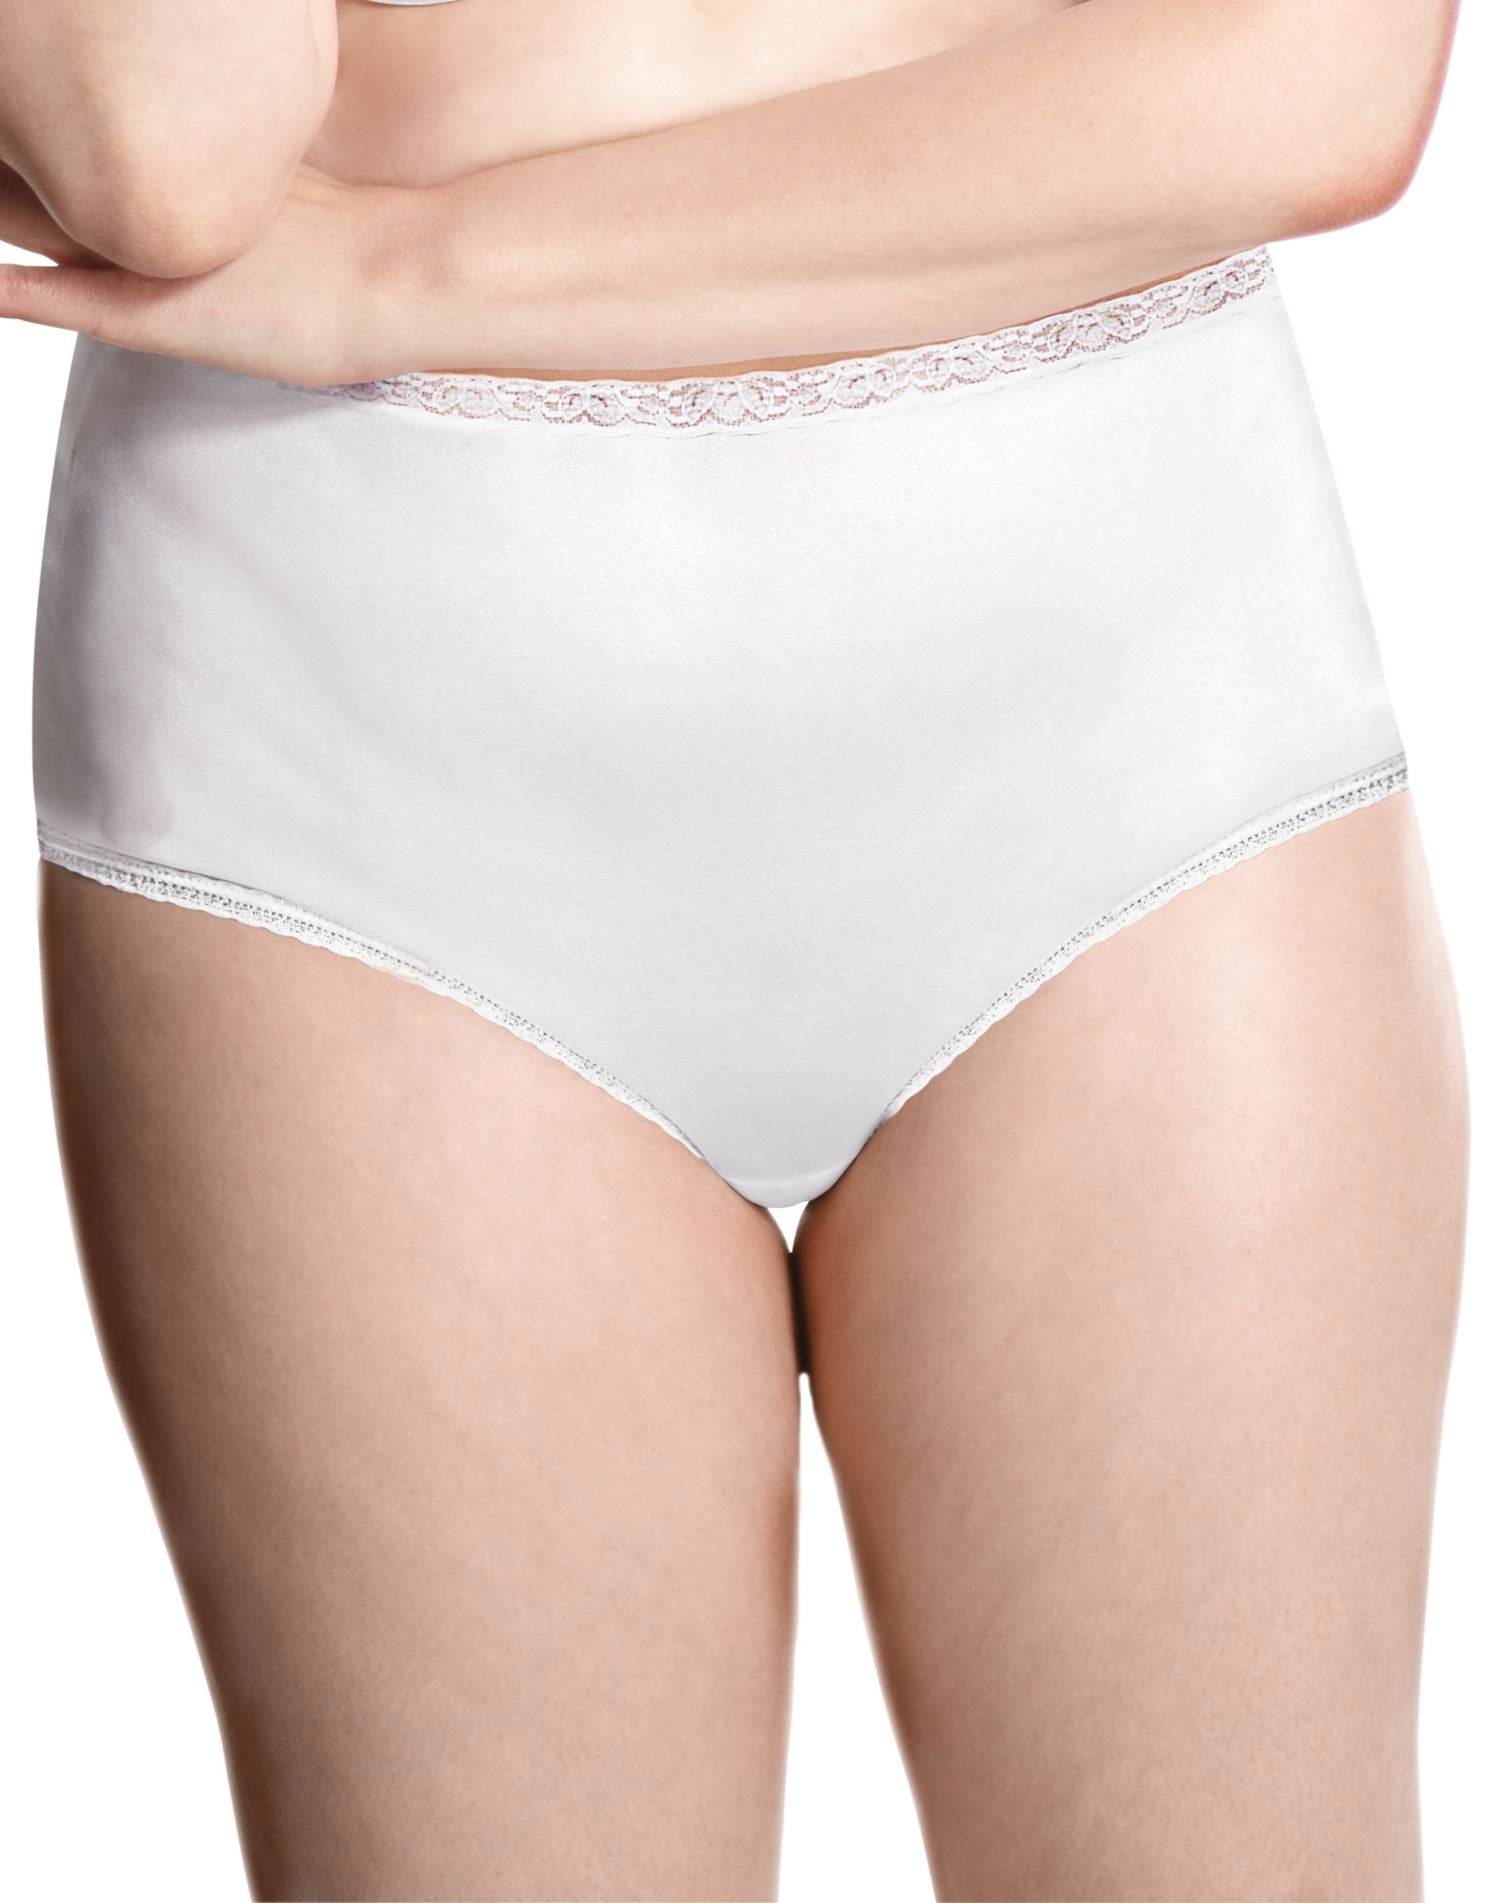 JMS Just My Size Brief Bikini Panties Underwear Nylon Hi-Cut 12 Plus Size  White